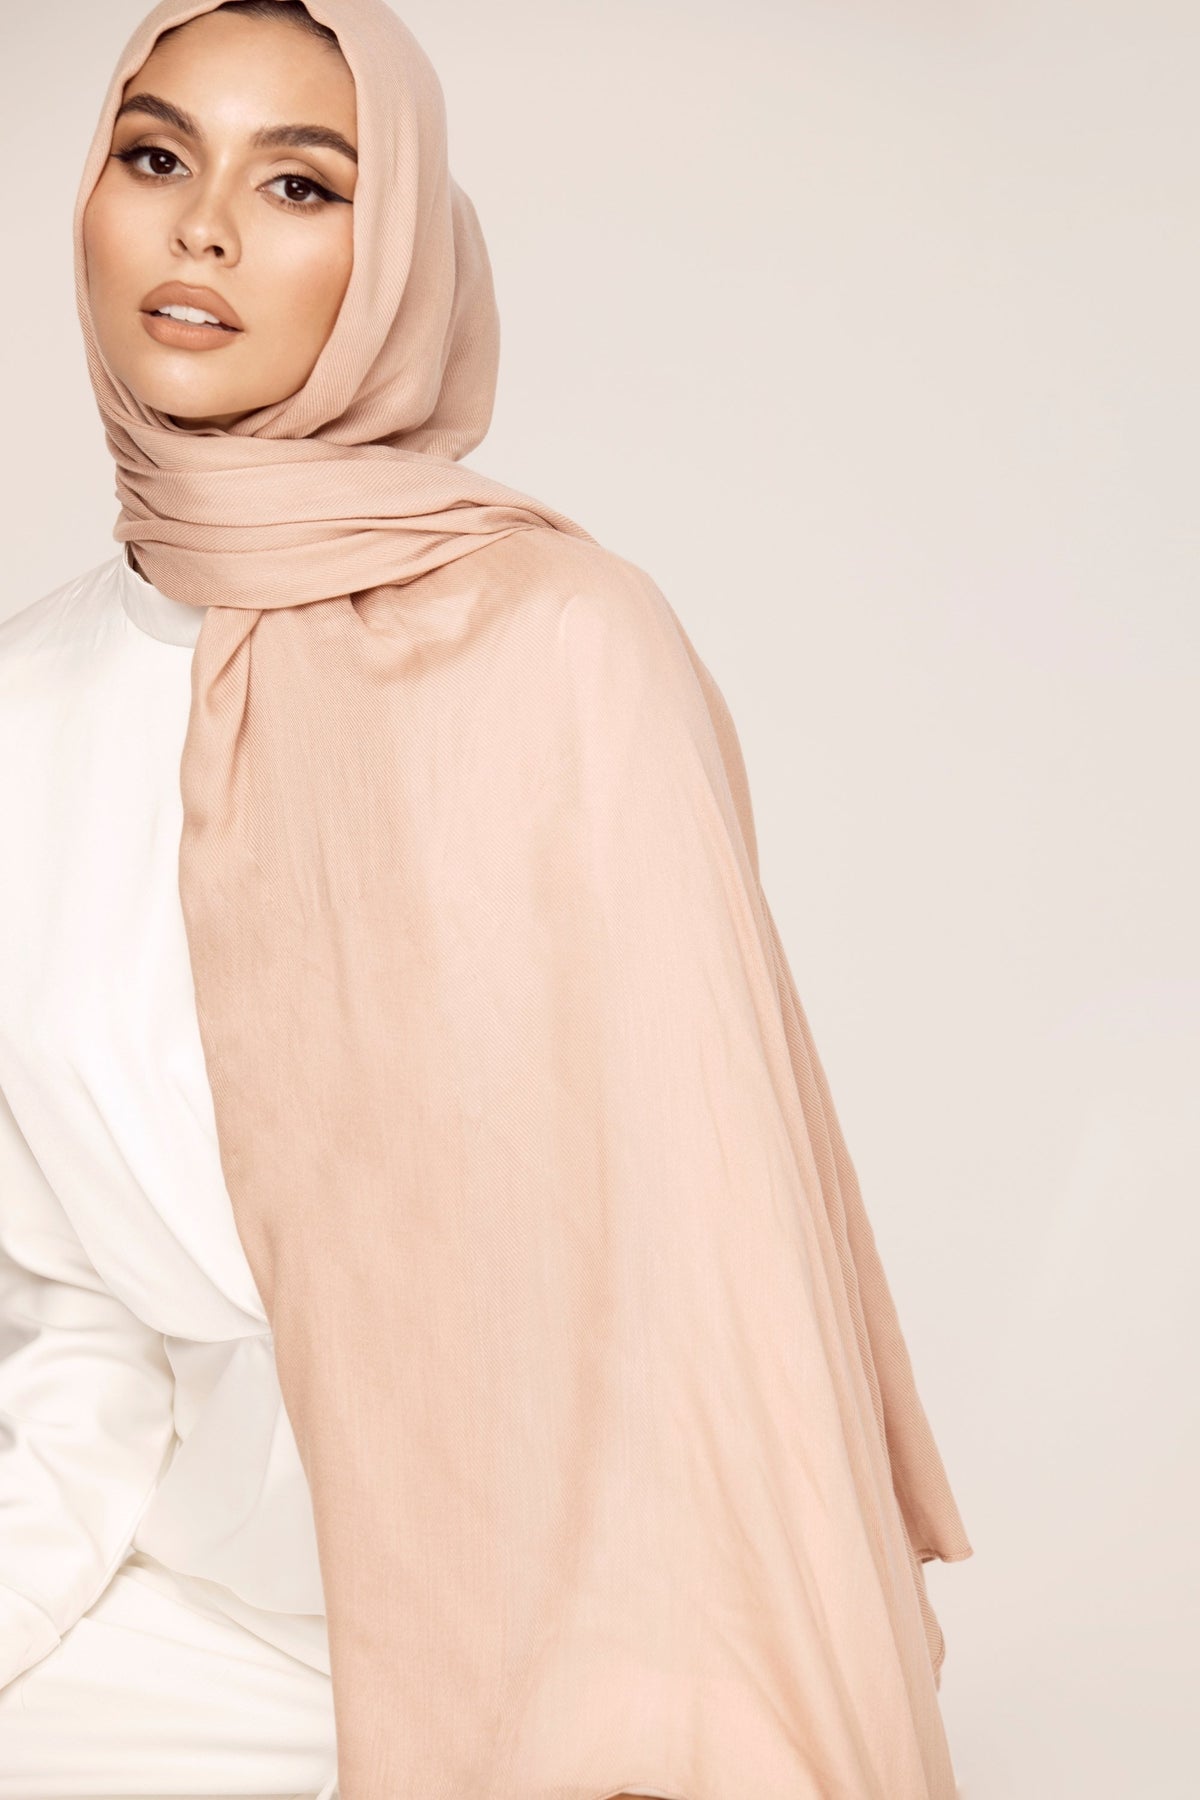 Premium Woven ECOVERO™ Hijab - Soft Brown epschoolboard 